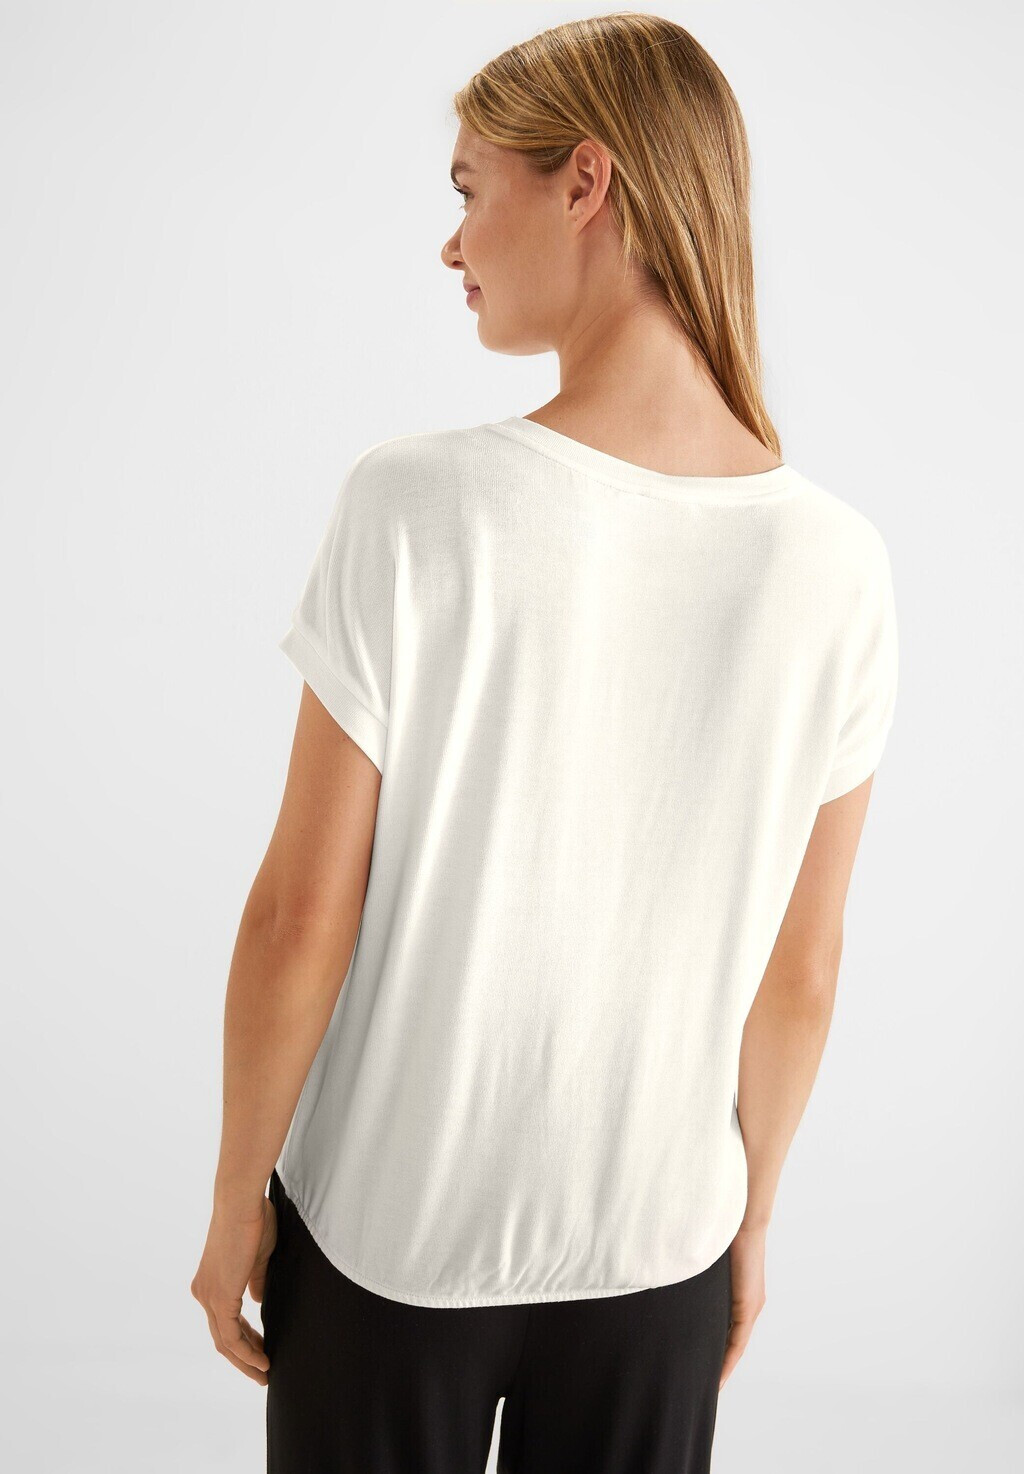 (A319650) One 22,67 € T-Shirt bei | Preisvergleich Street white off ab